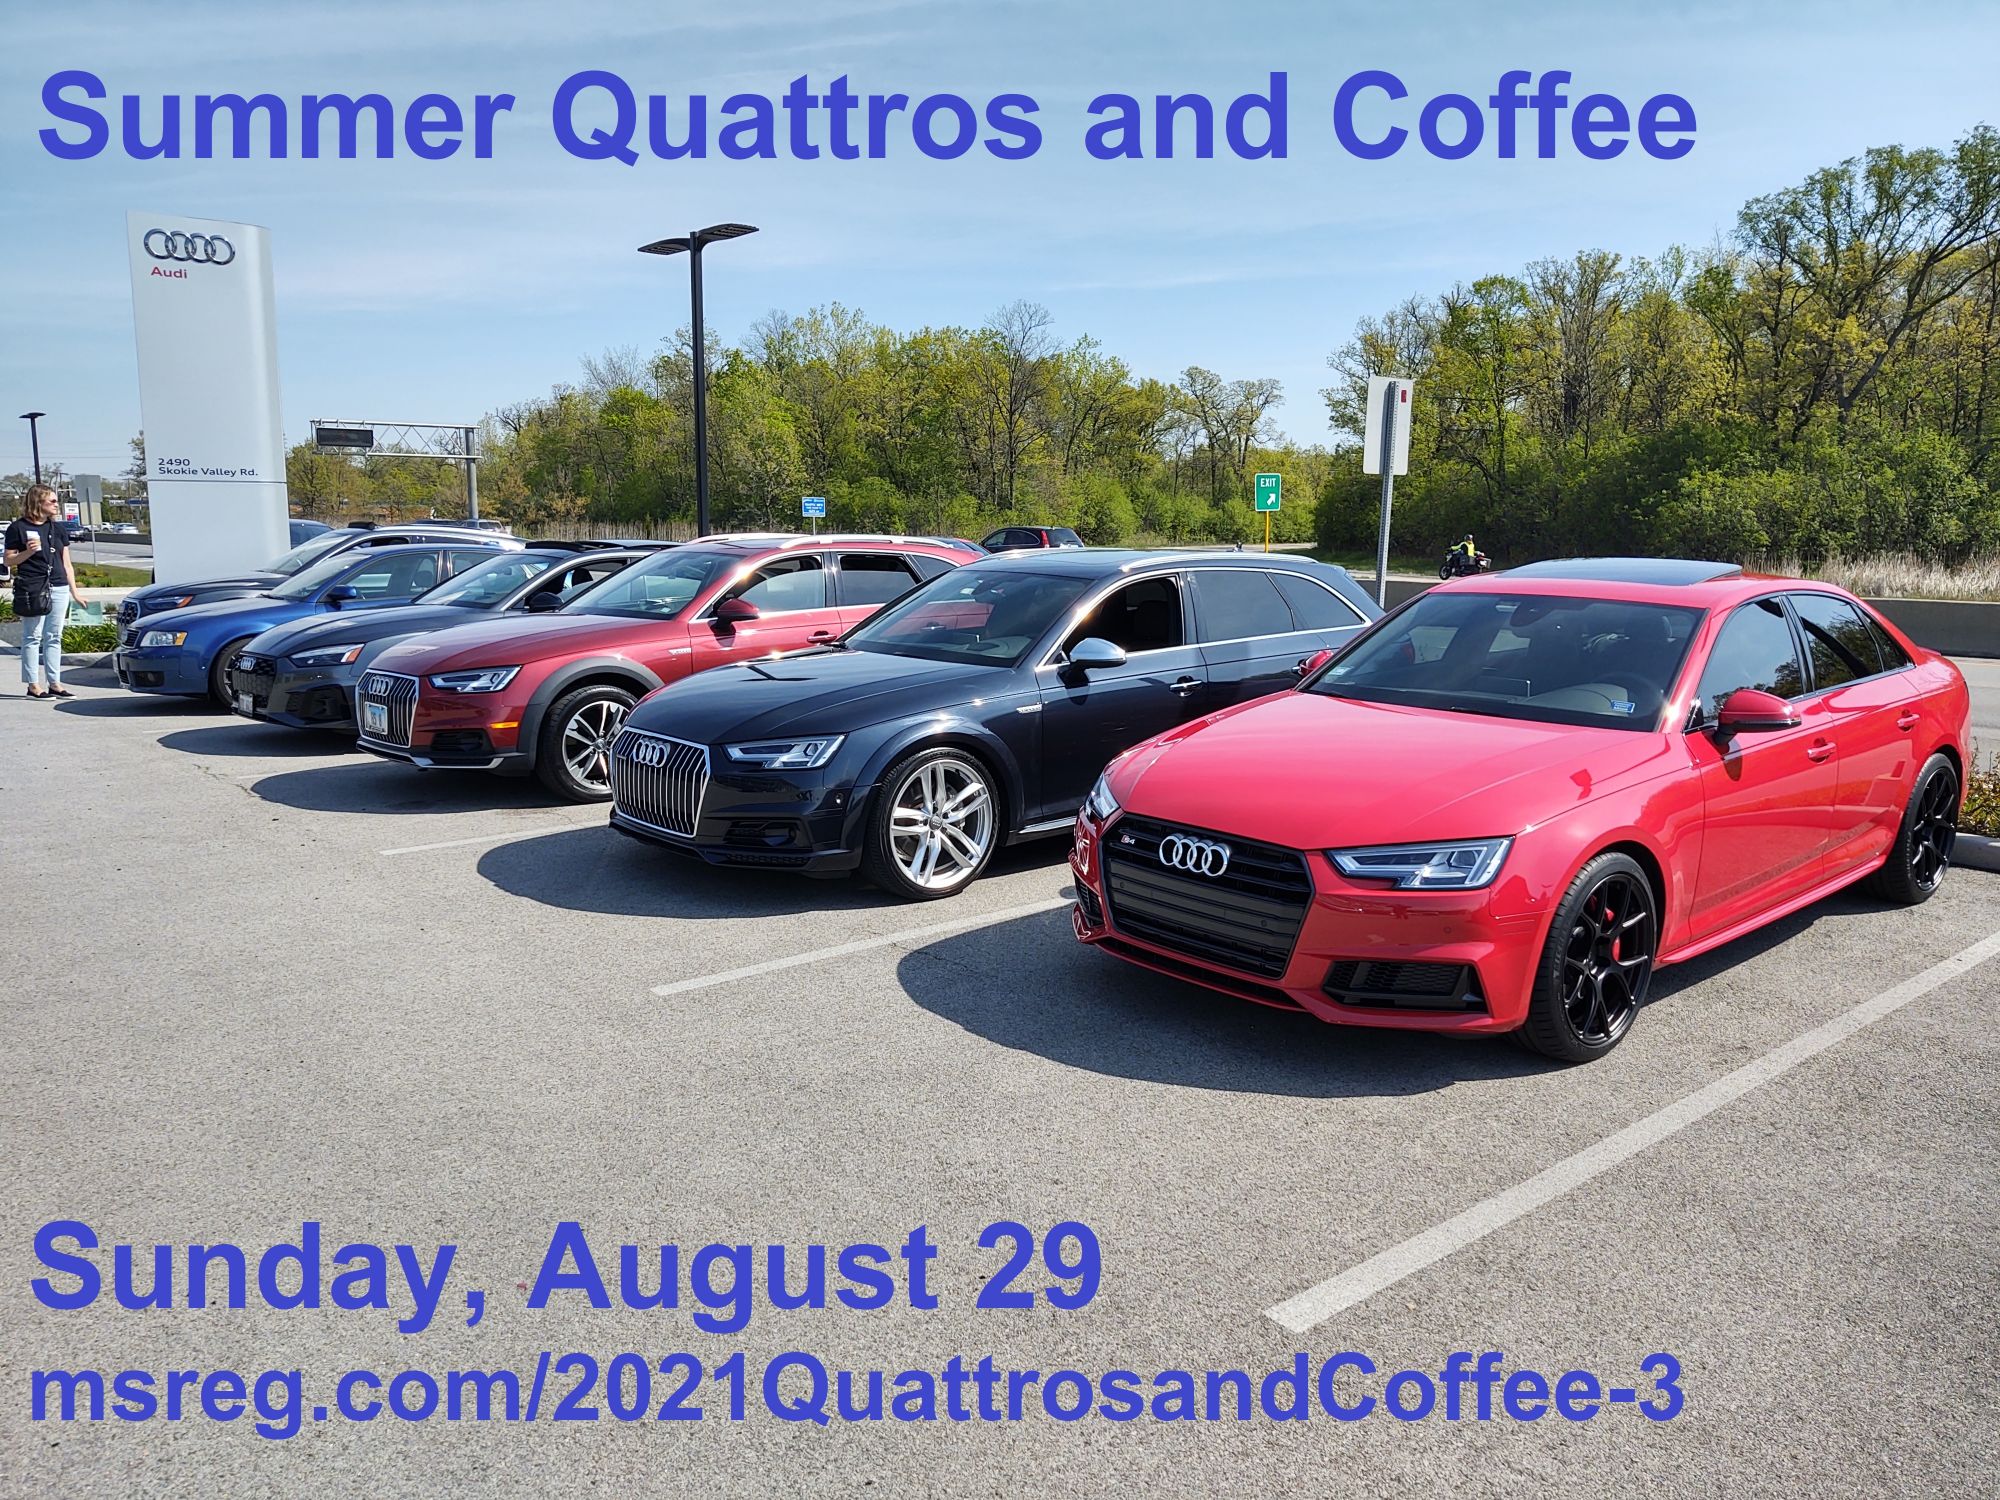 Summer Quattros and Coffee - Aug 29, 2021